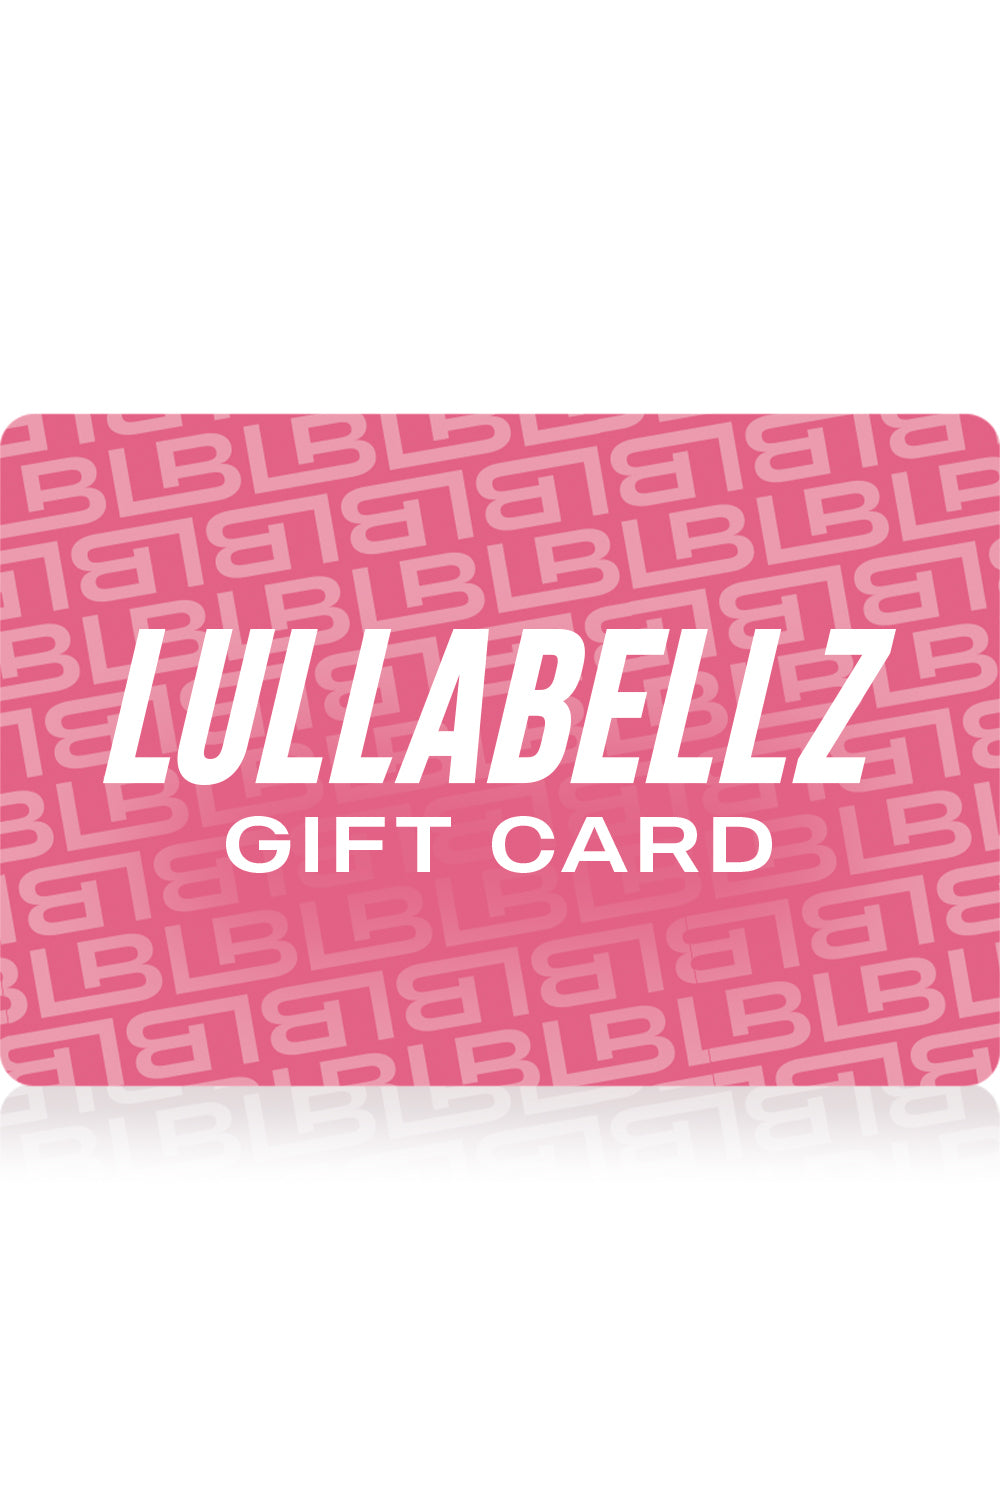 LullaBellz Gift Card - PS500